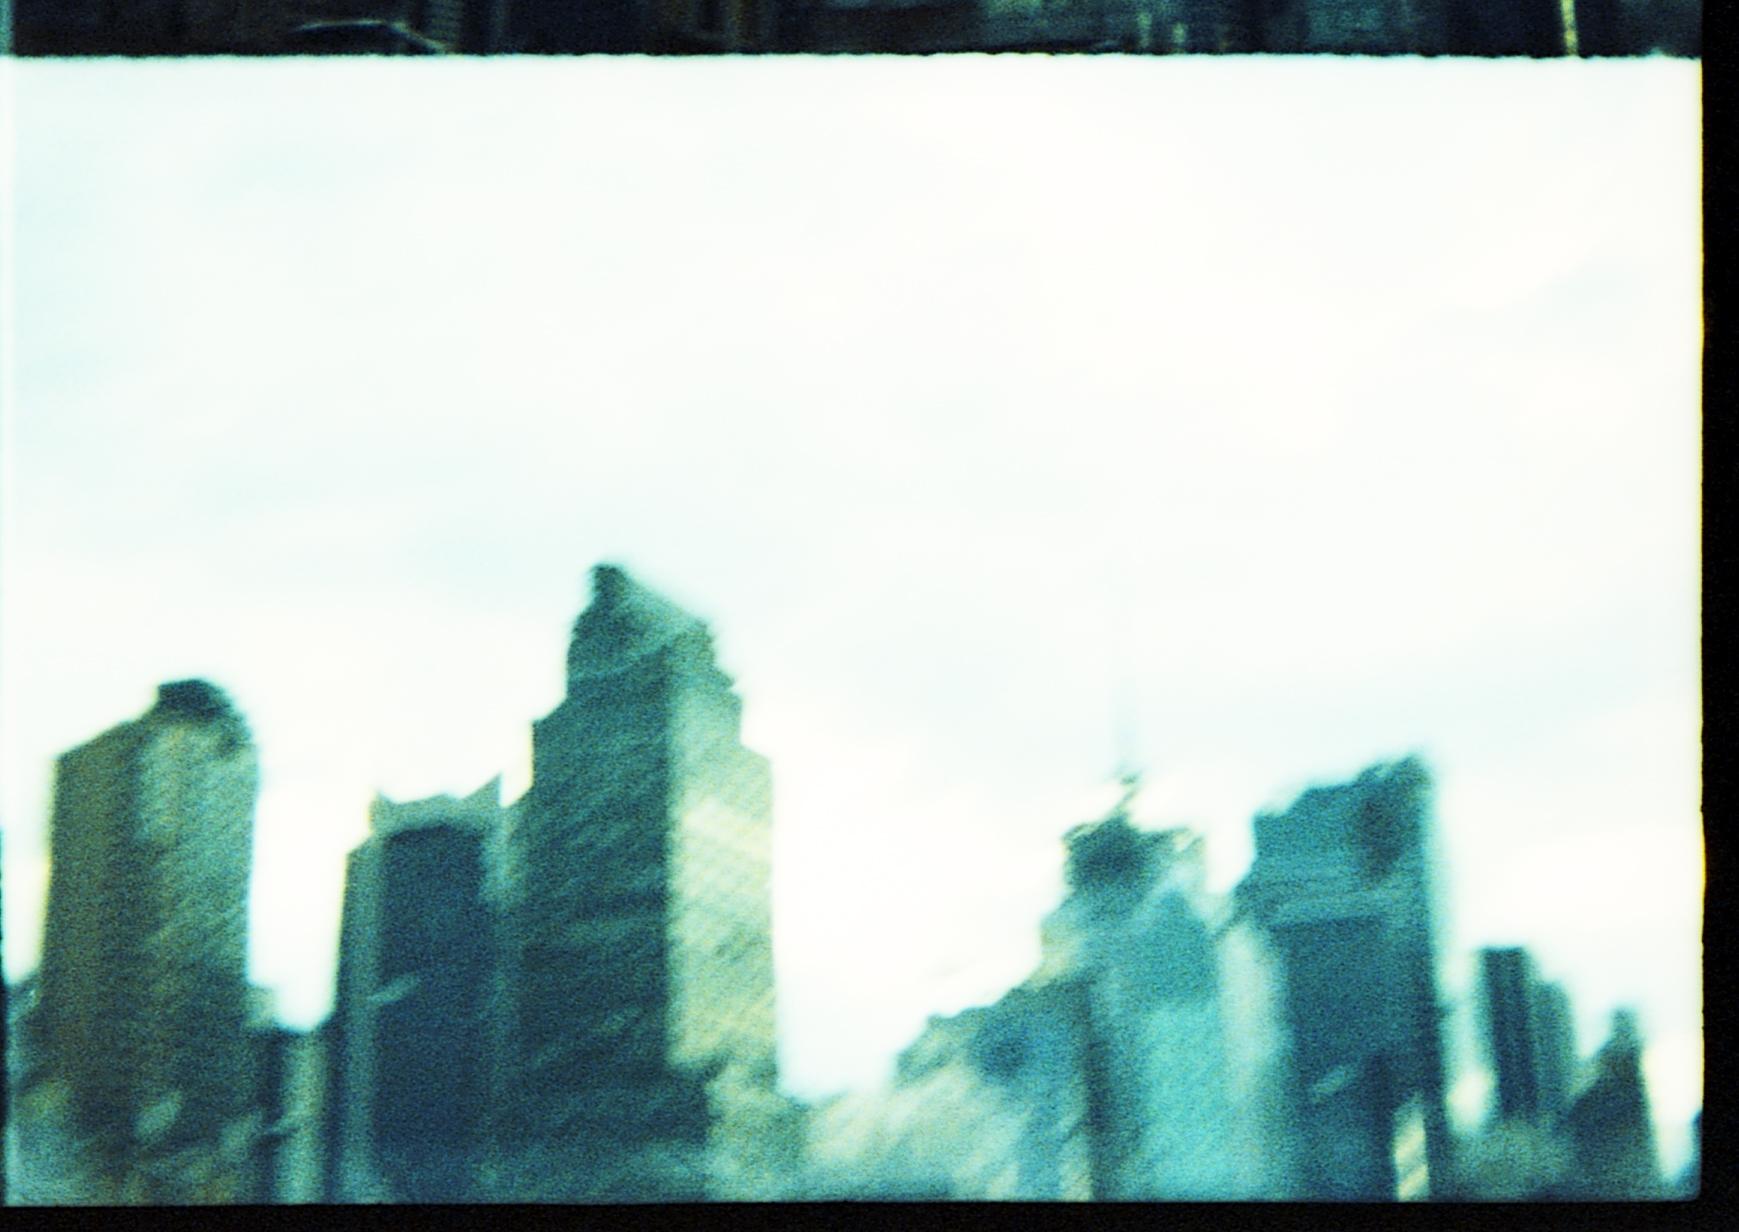 Stefanie Schneider Color Photograph - New York (Strange Love) - Empire State Building, New York, Landscape